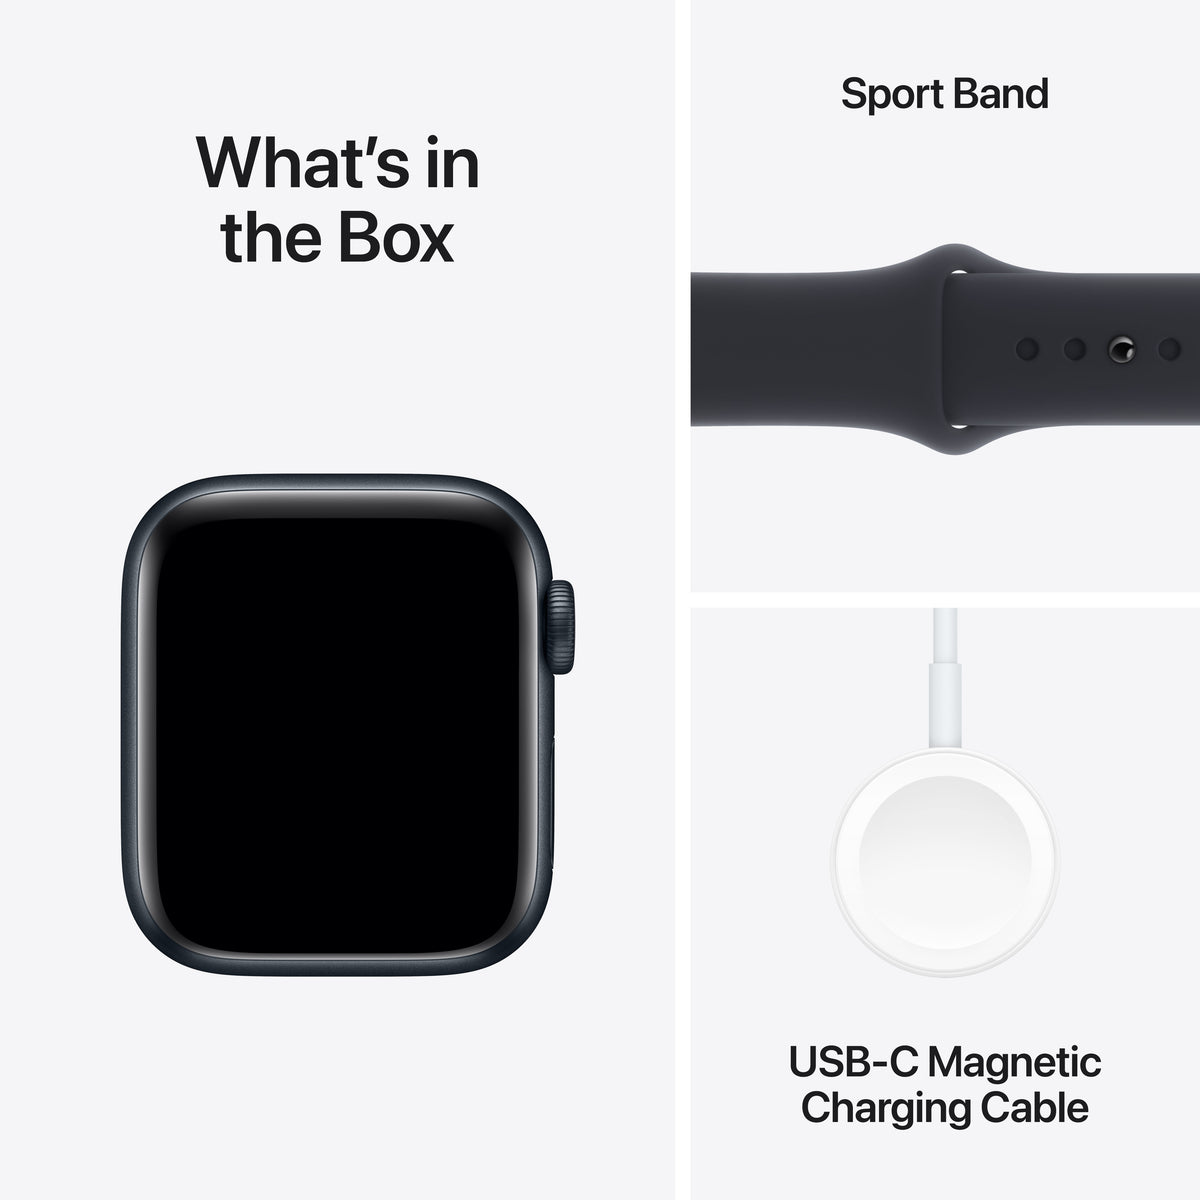 Apple Watch SE 40 Midnight Aluminium With Case Midnight Sport Band S/M - GPS